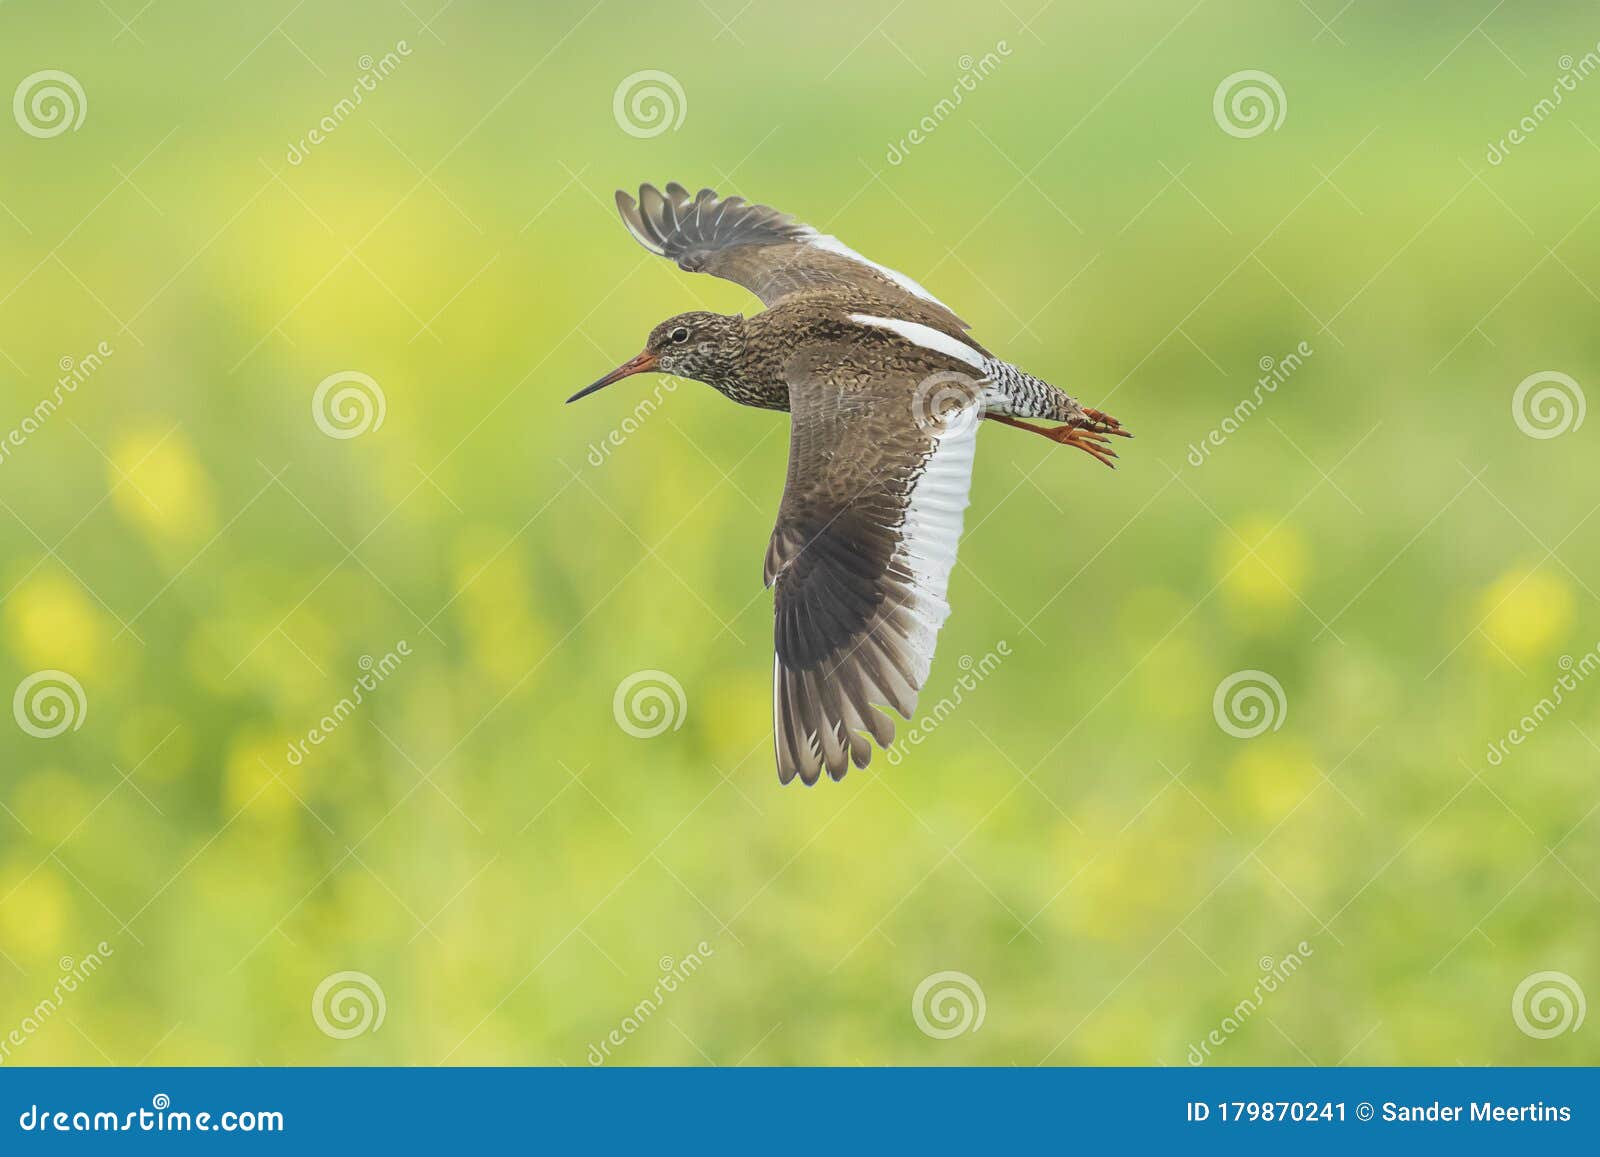 common redshank tringa totanus wader bird in flight